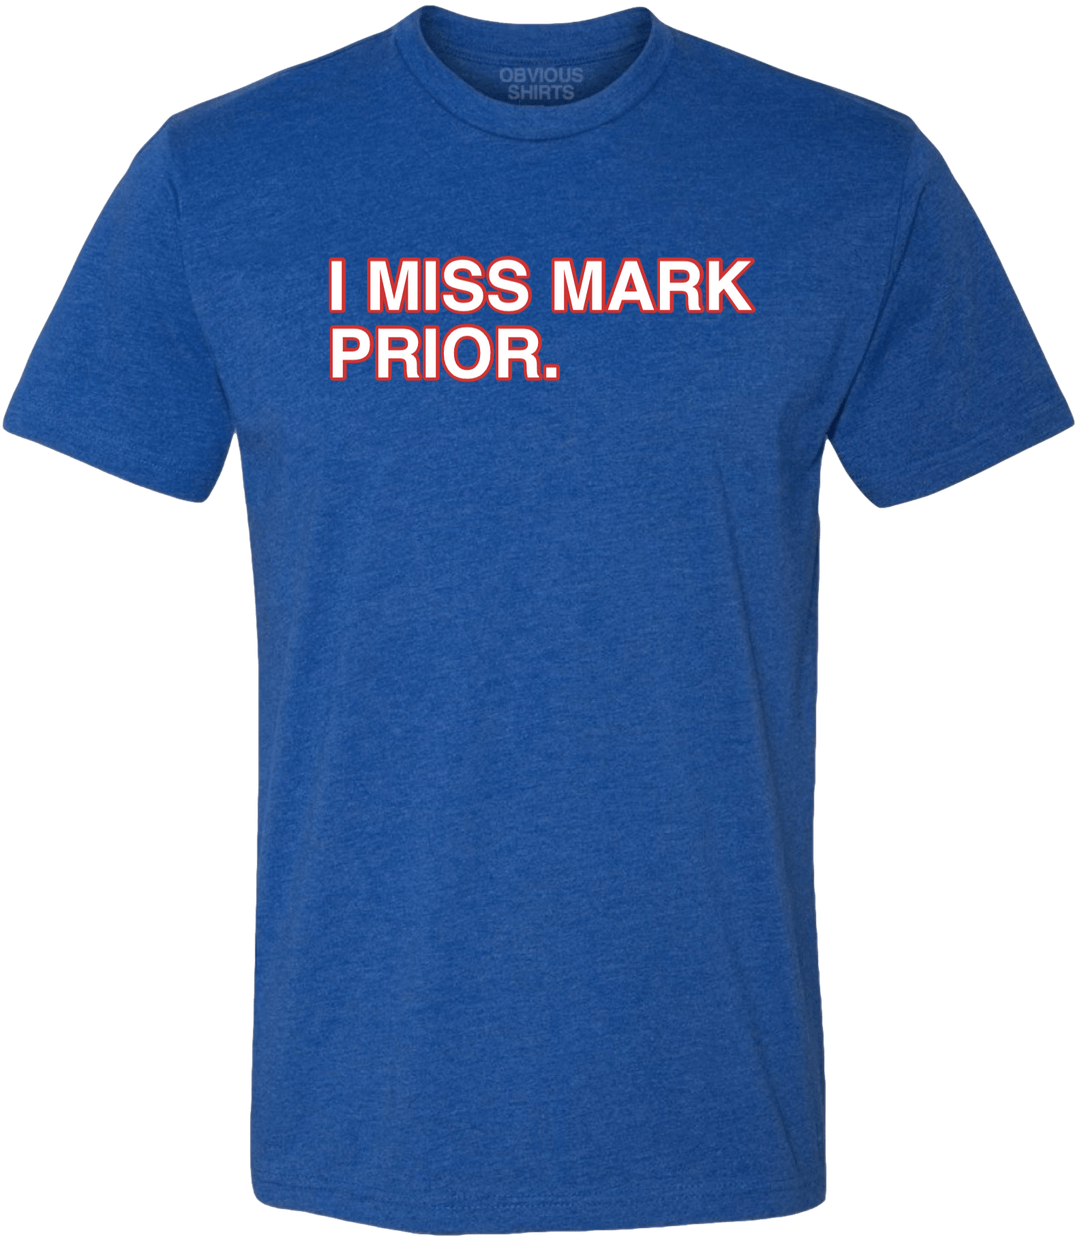 I MISS MARK PRIOR. - OBVIOUS SHIRTS.